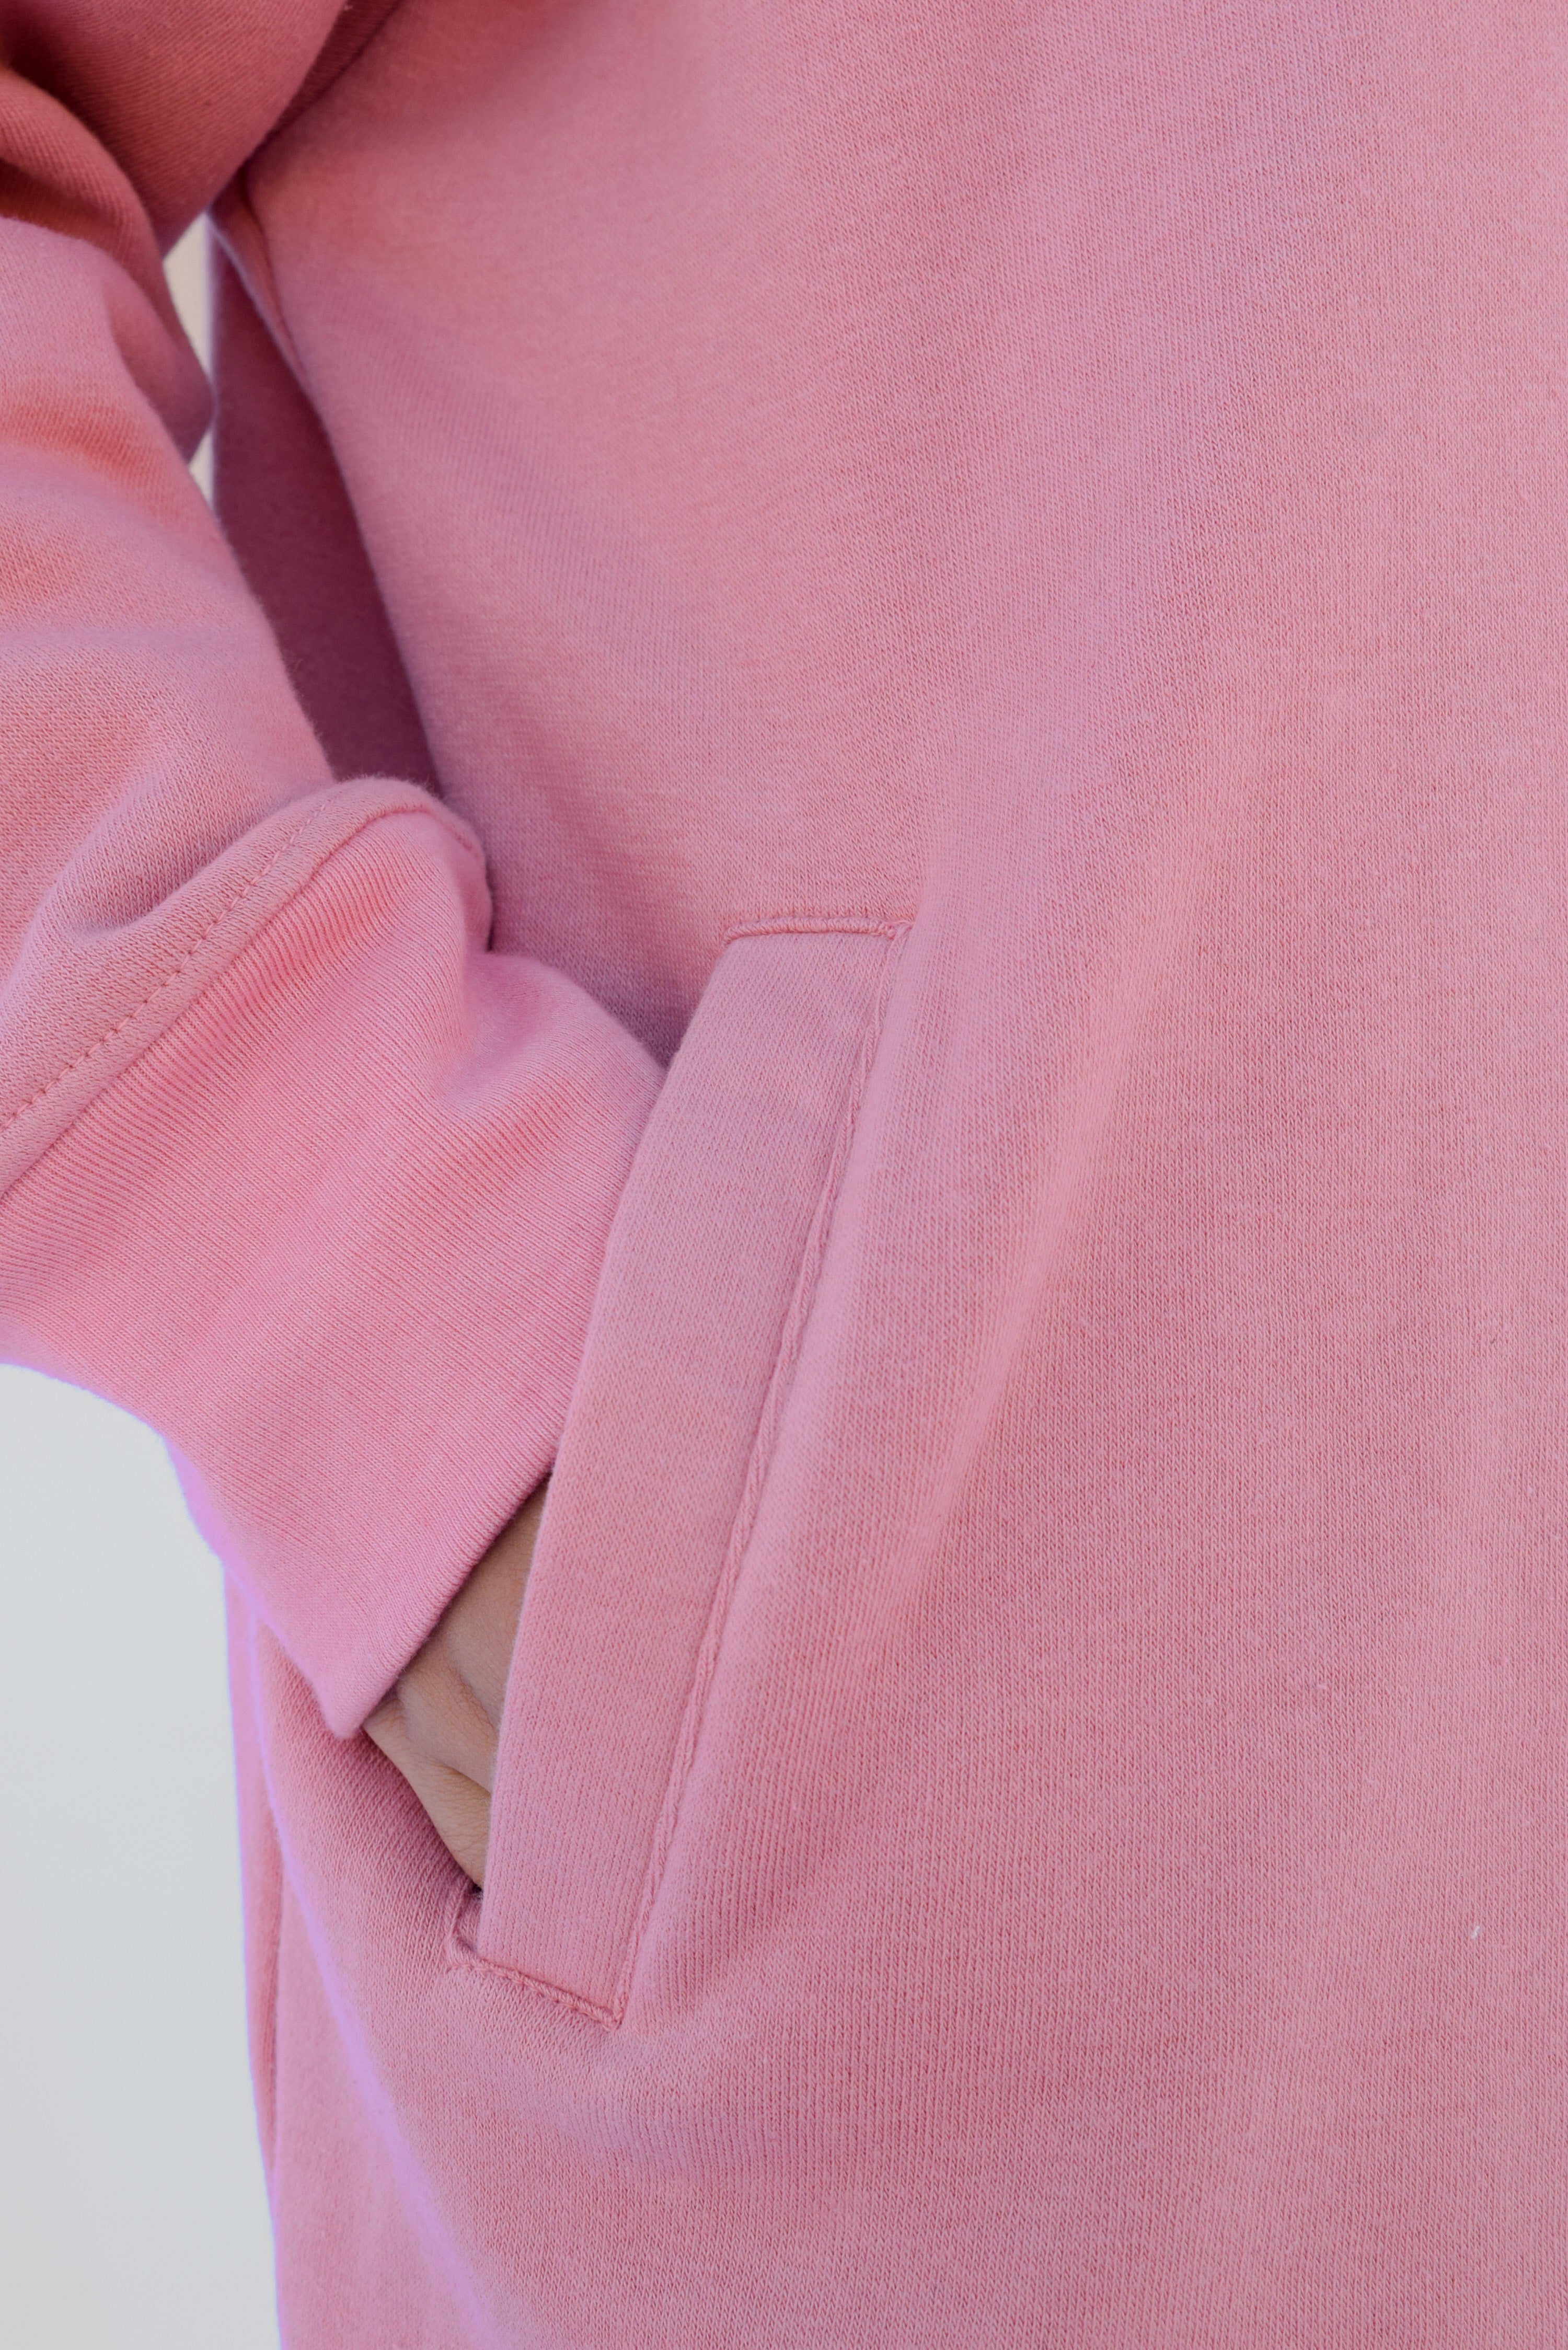 Winter Hoodie Sweatsuit - Pink